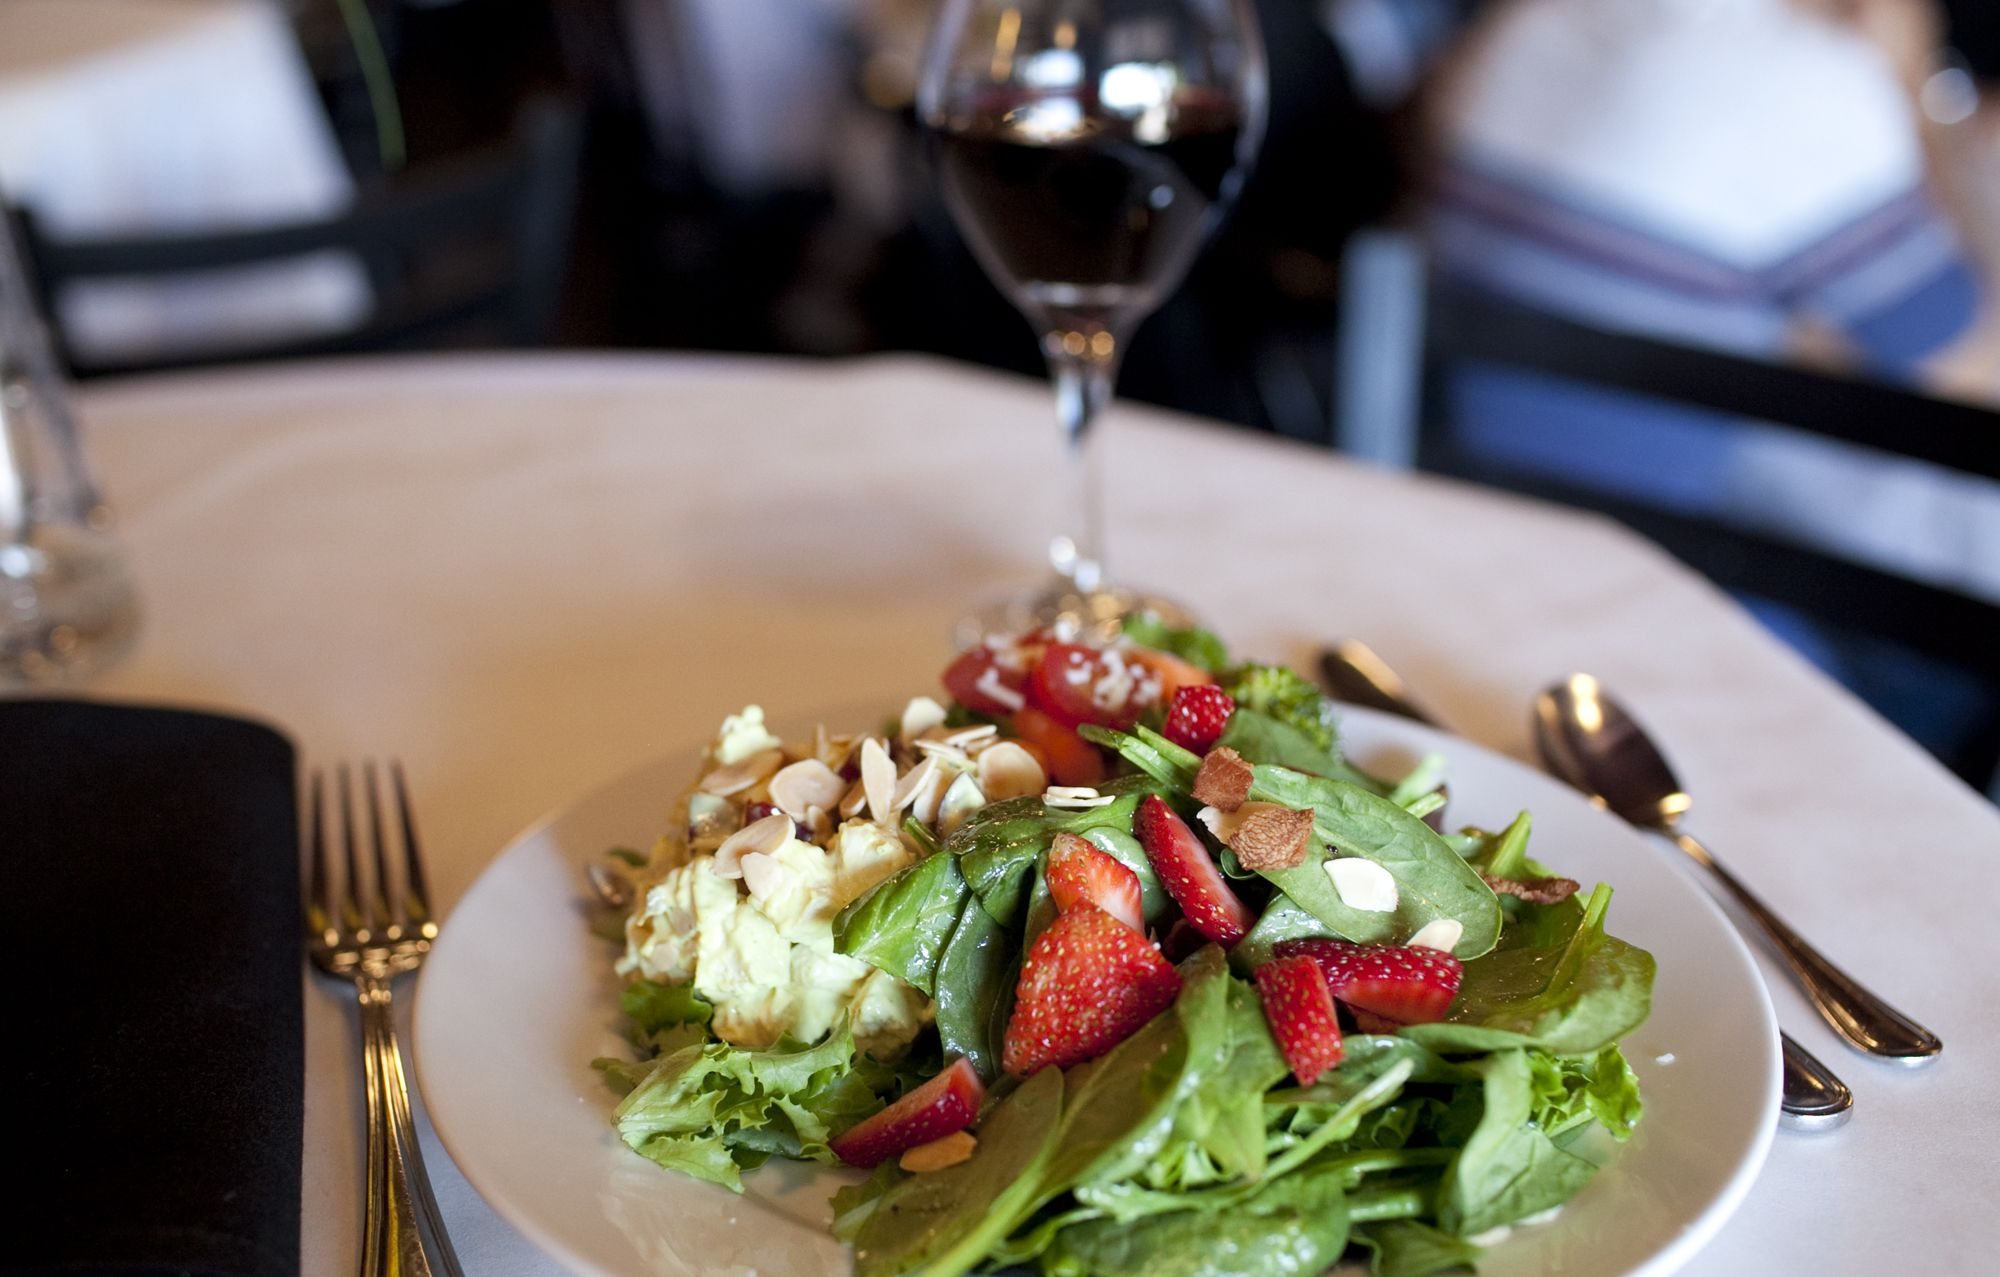 K'Syrah's Trio of Salads puts three distinct salads onto a single dish.